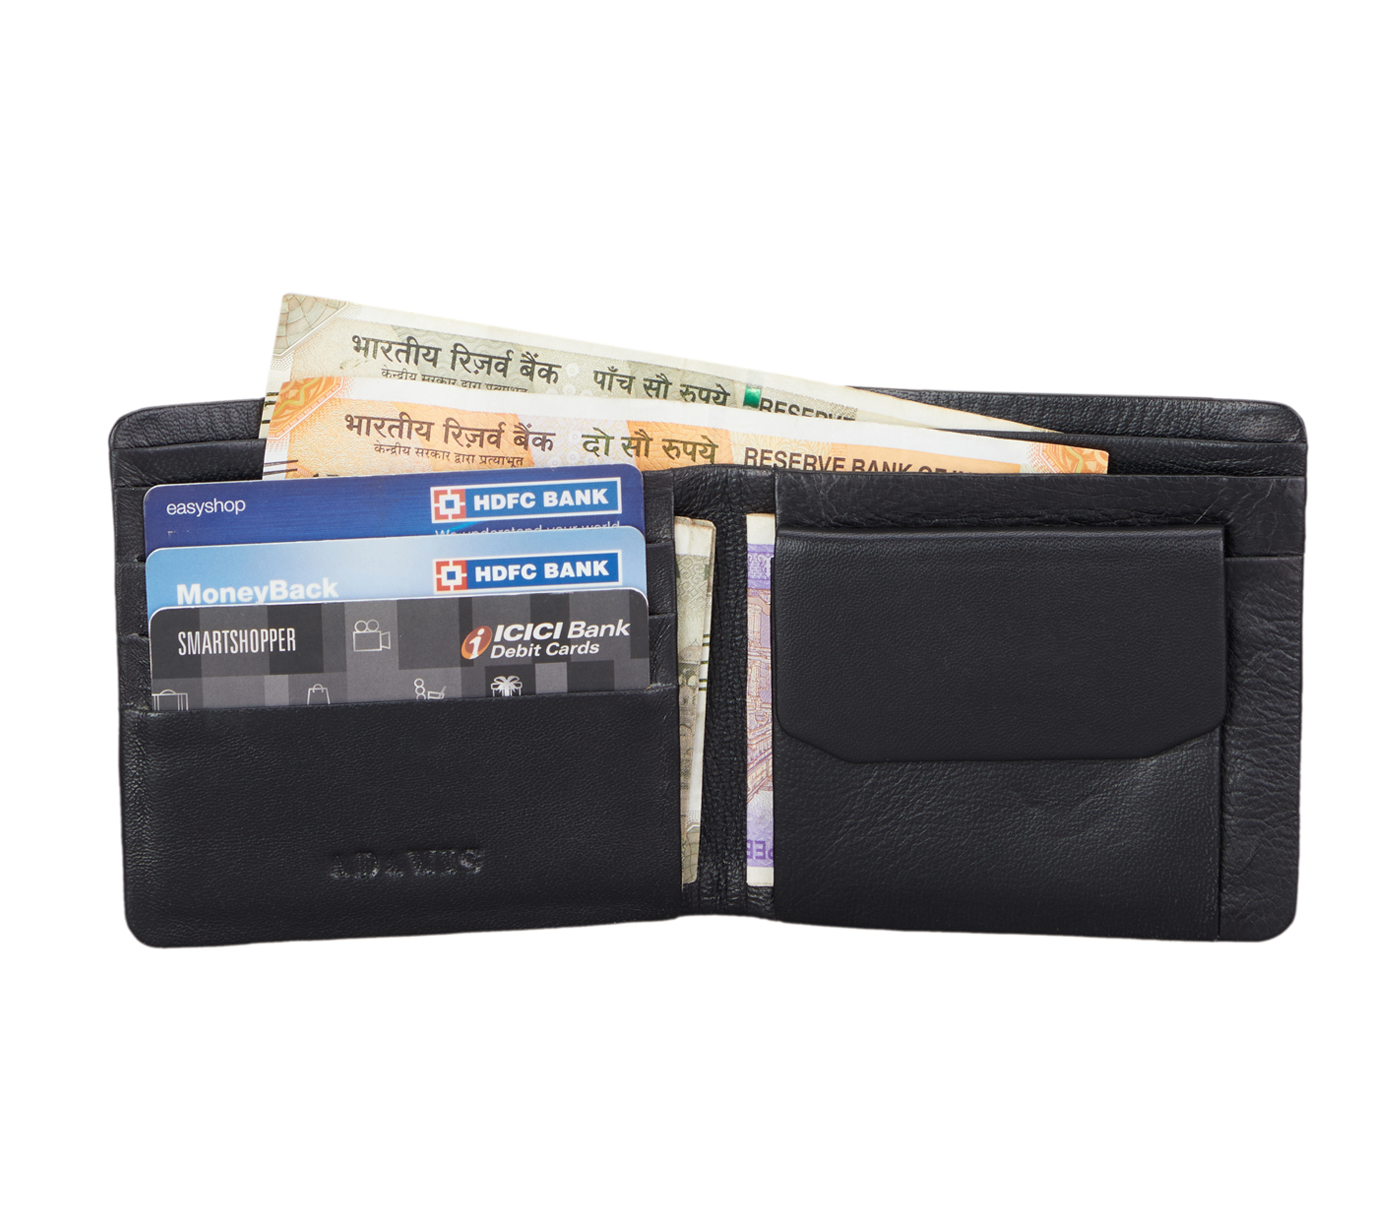 VW1-Ashton-Men's bifold wallet with coin pocket in Genuine Leather - Black